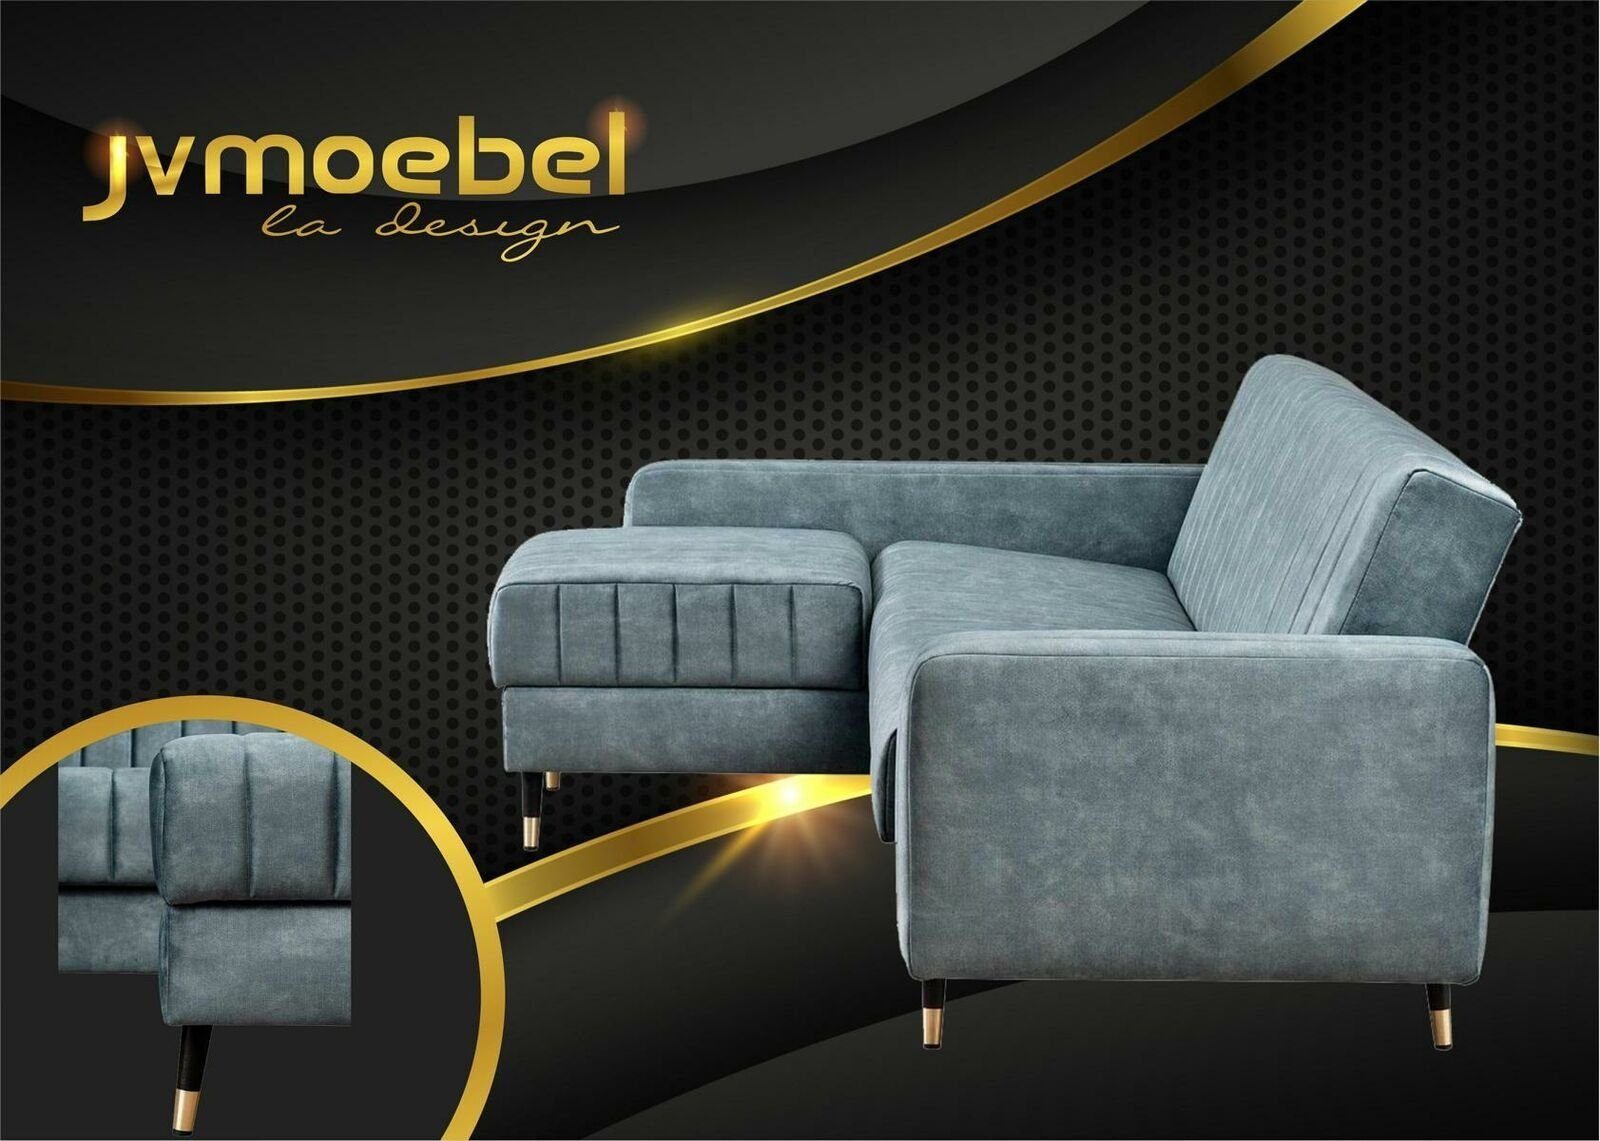 JVmoebel Ecksofa, Design Eck Luxus Garnitur Polster Couchen Sofa Eckcouch Grau